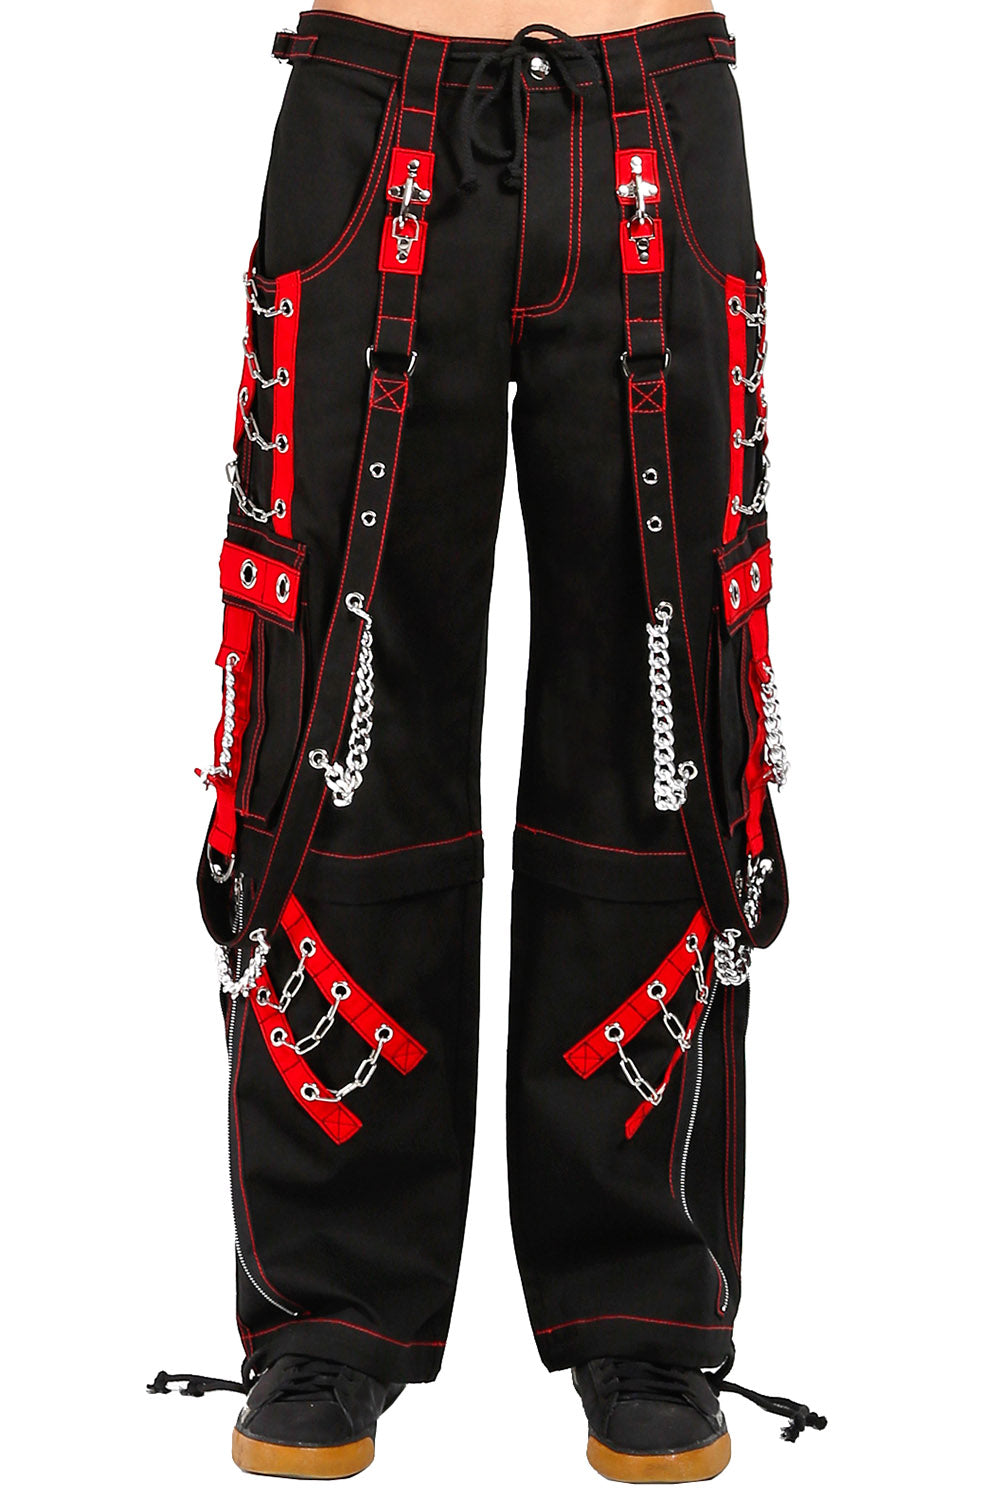 Tripp Rough Rider Pants [Black/Red]